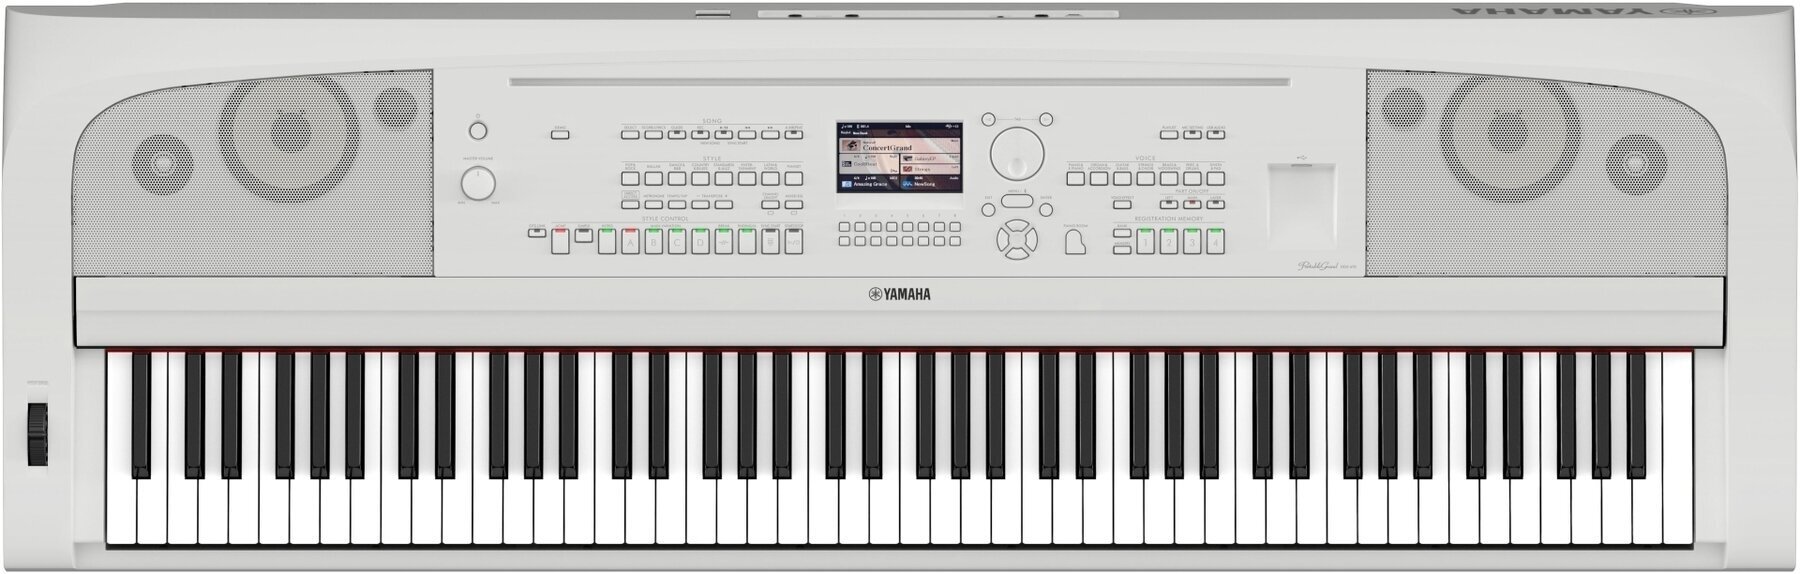 Színpadi zongora Yamaha DGX 670 Színpadi zongora